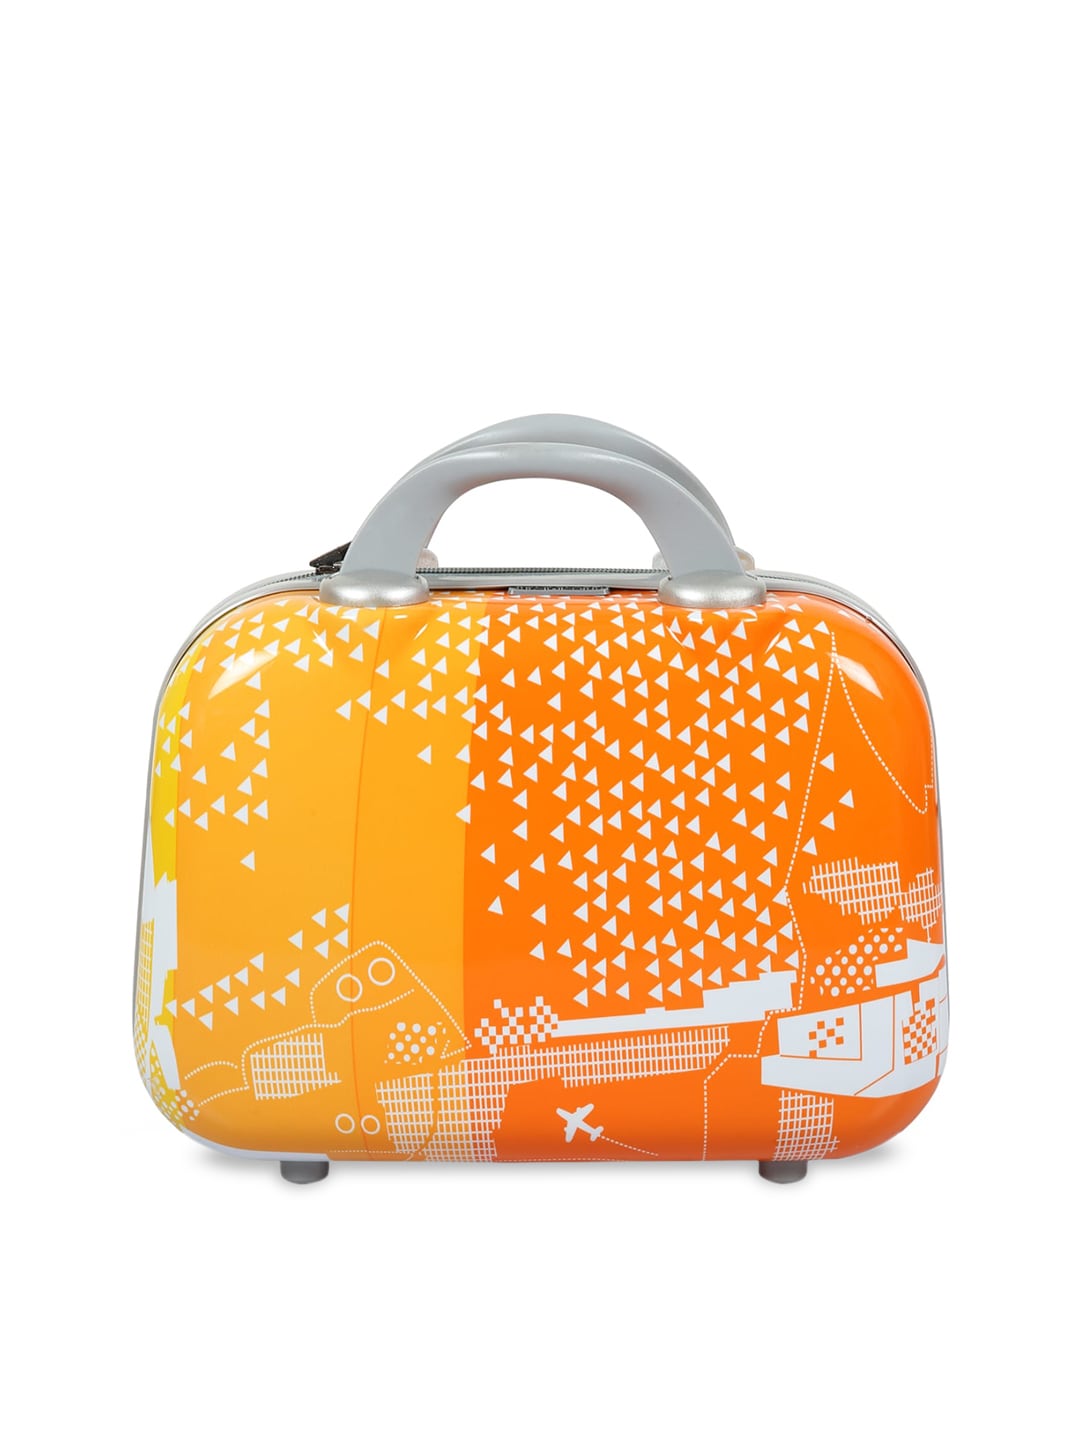 Polo Class Orange Travel Big Vanity Bag Price in India